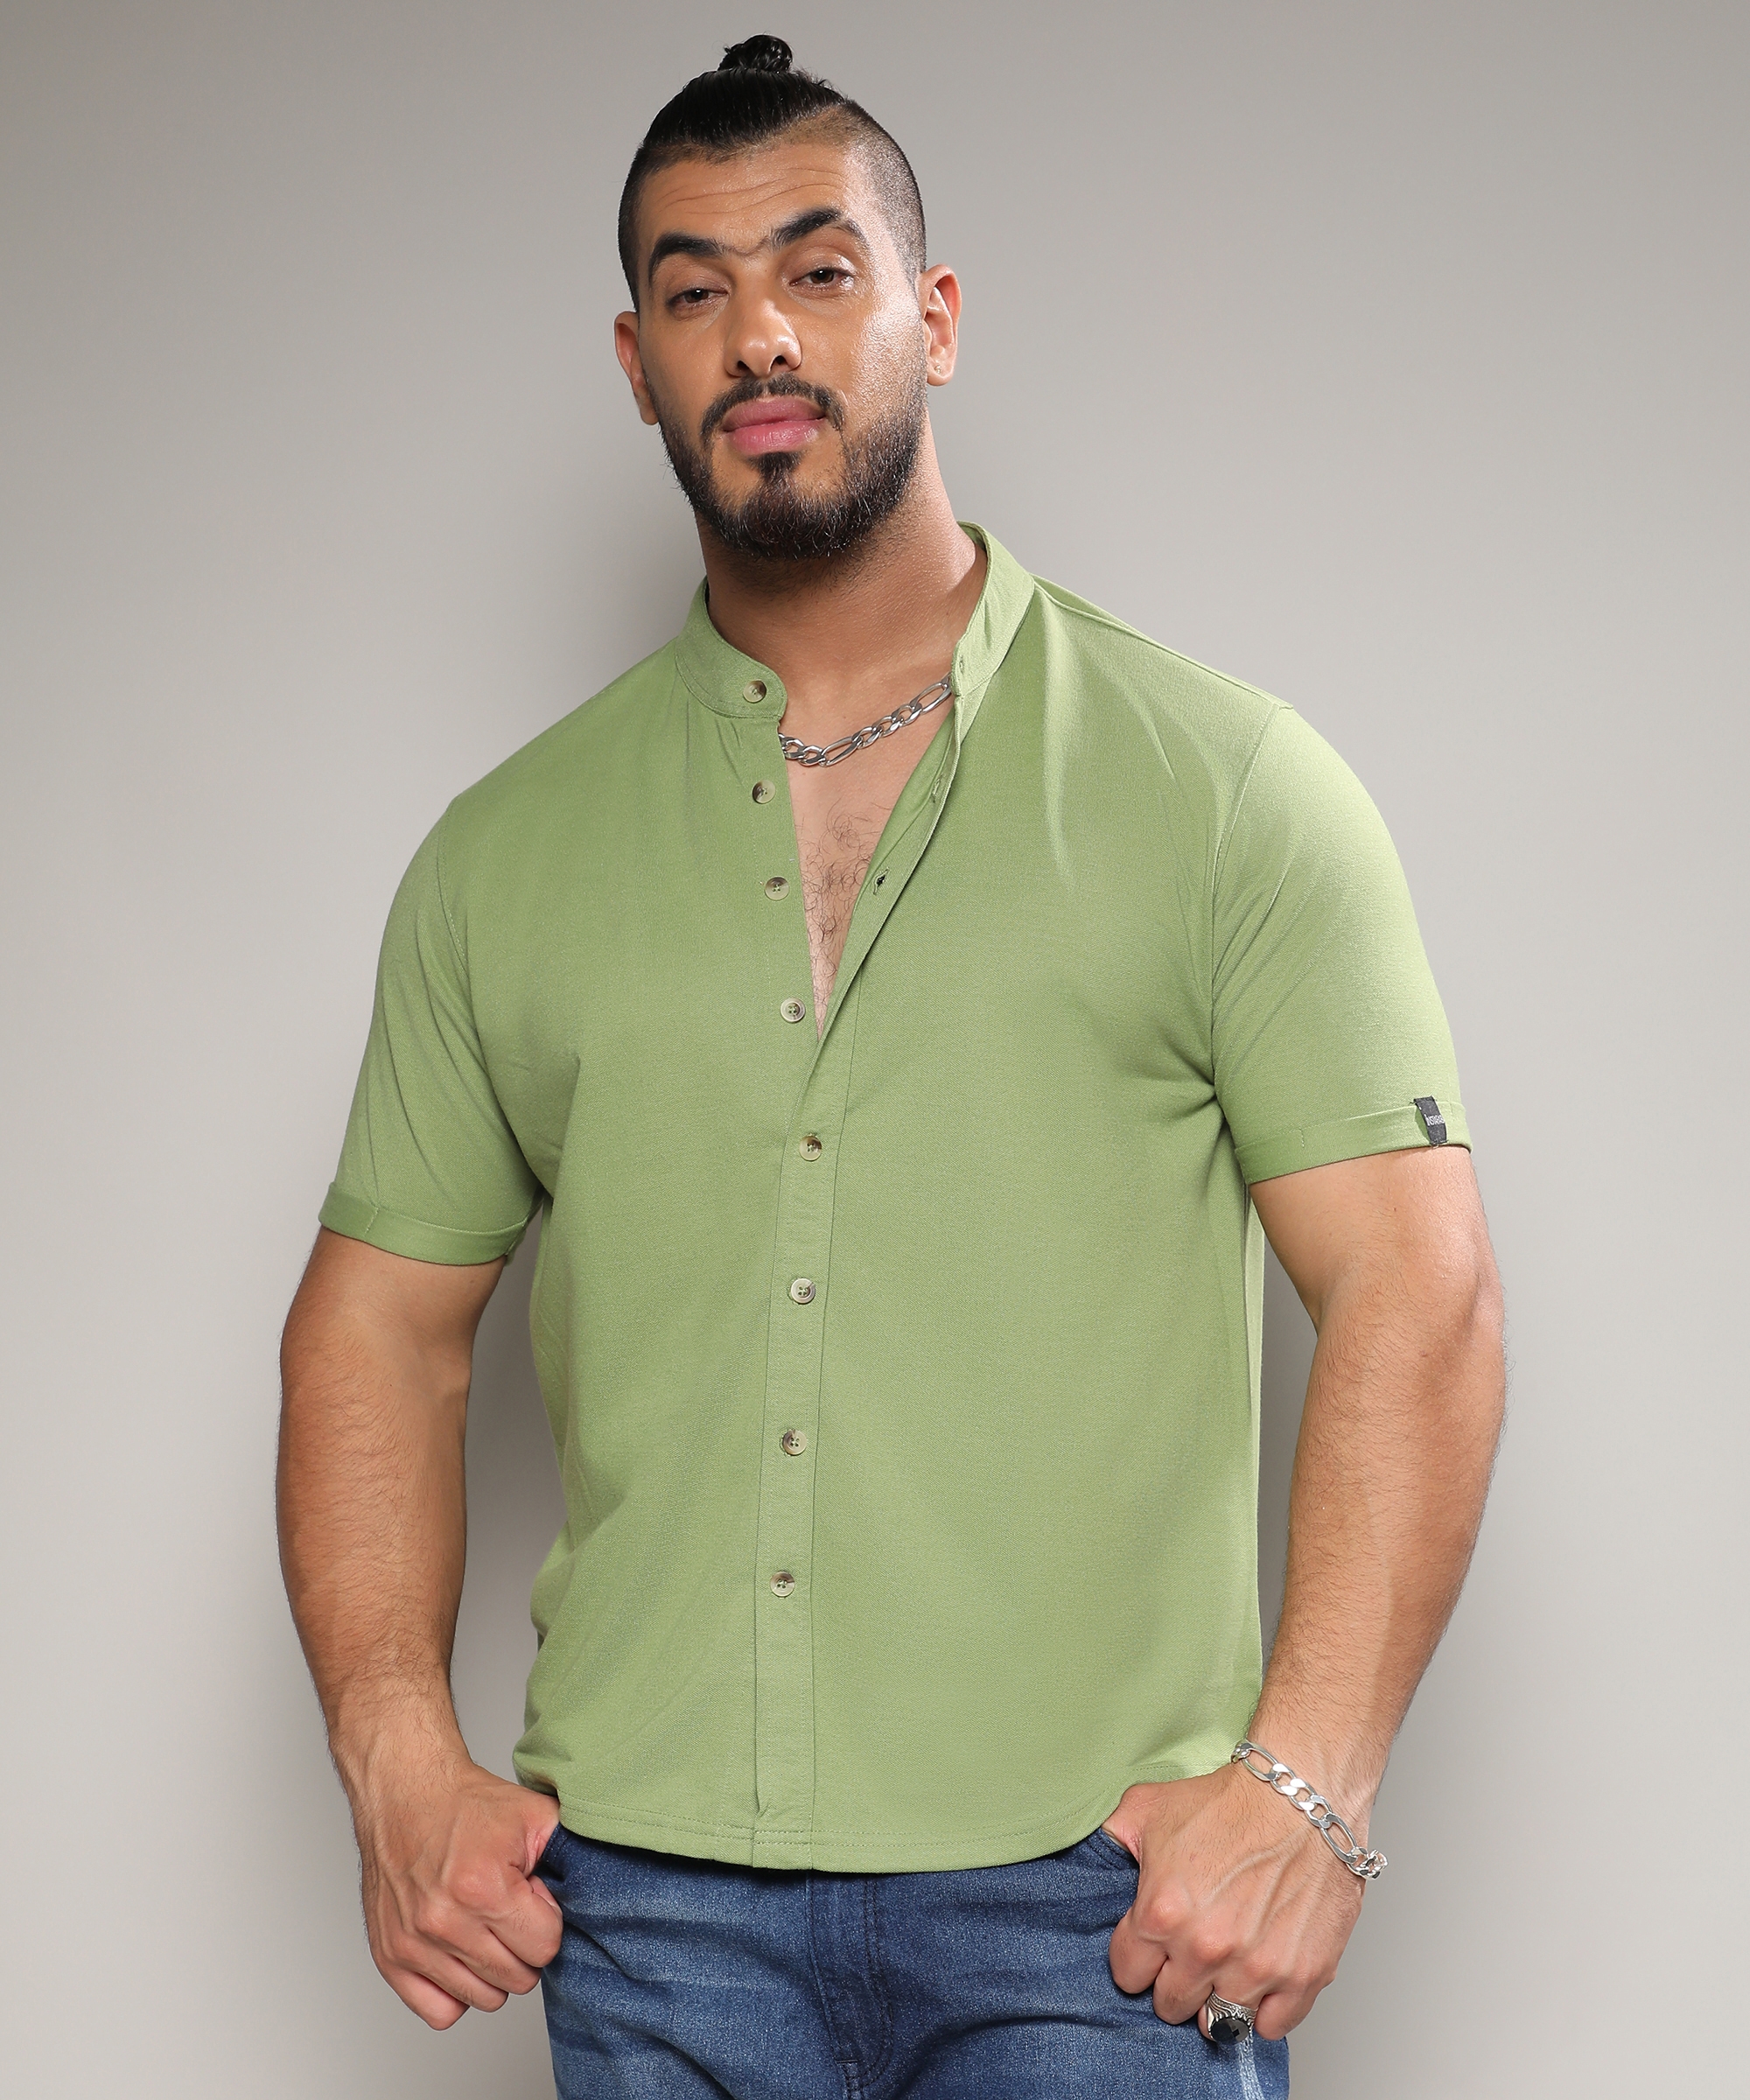 Instafab Plus | Men's Asparagus Green Basic Button-Up Shirt